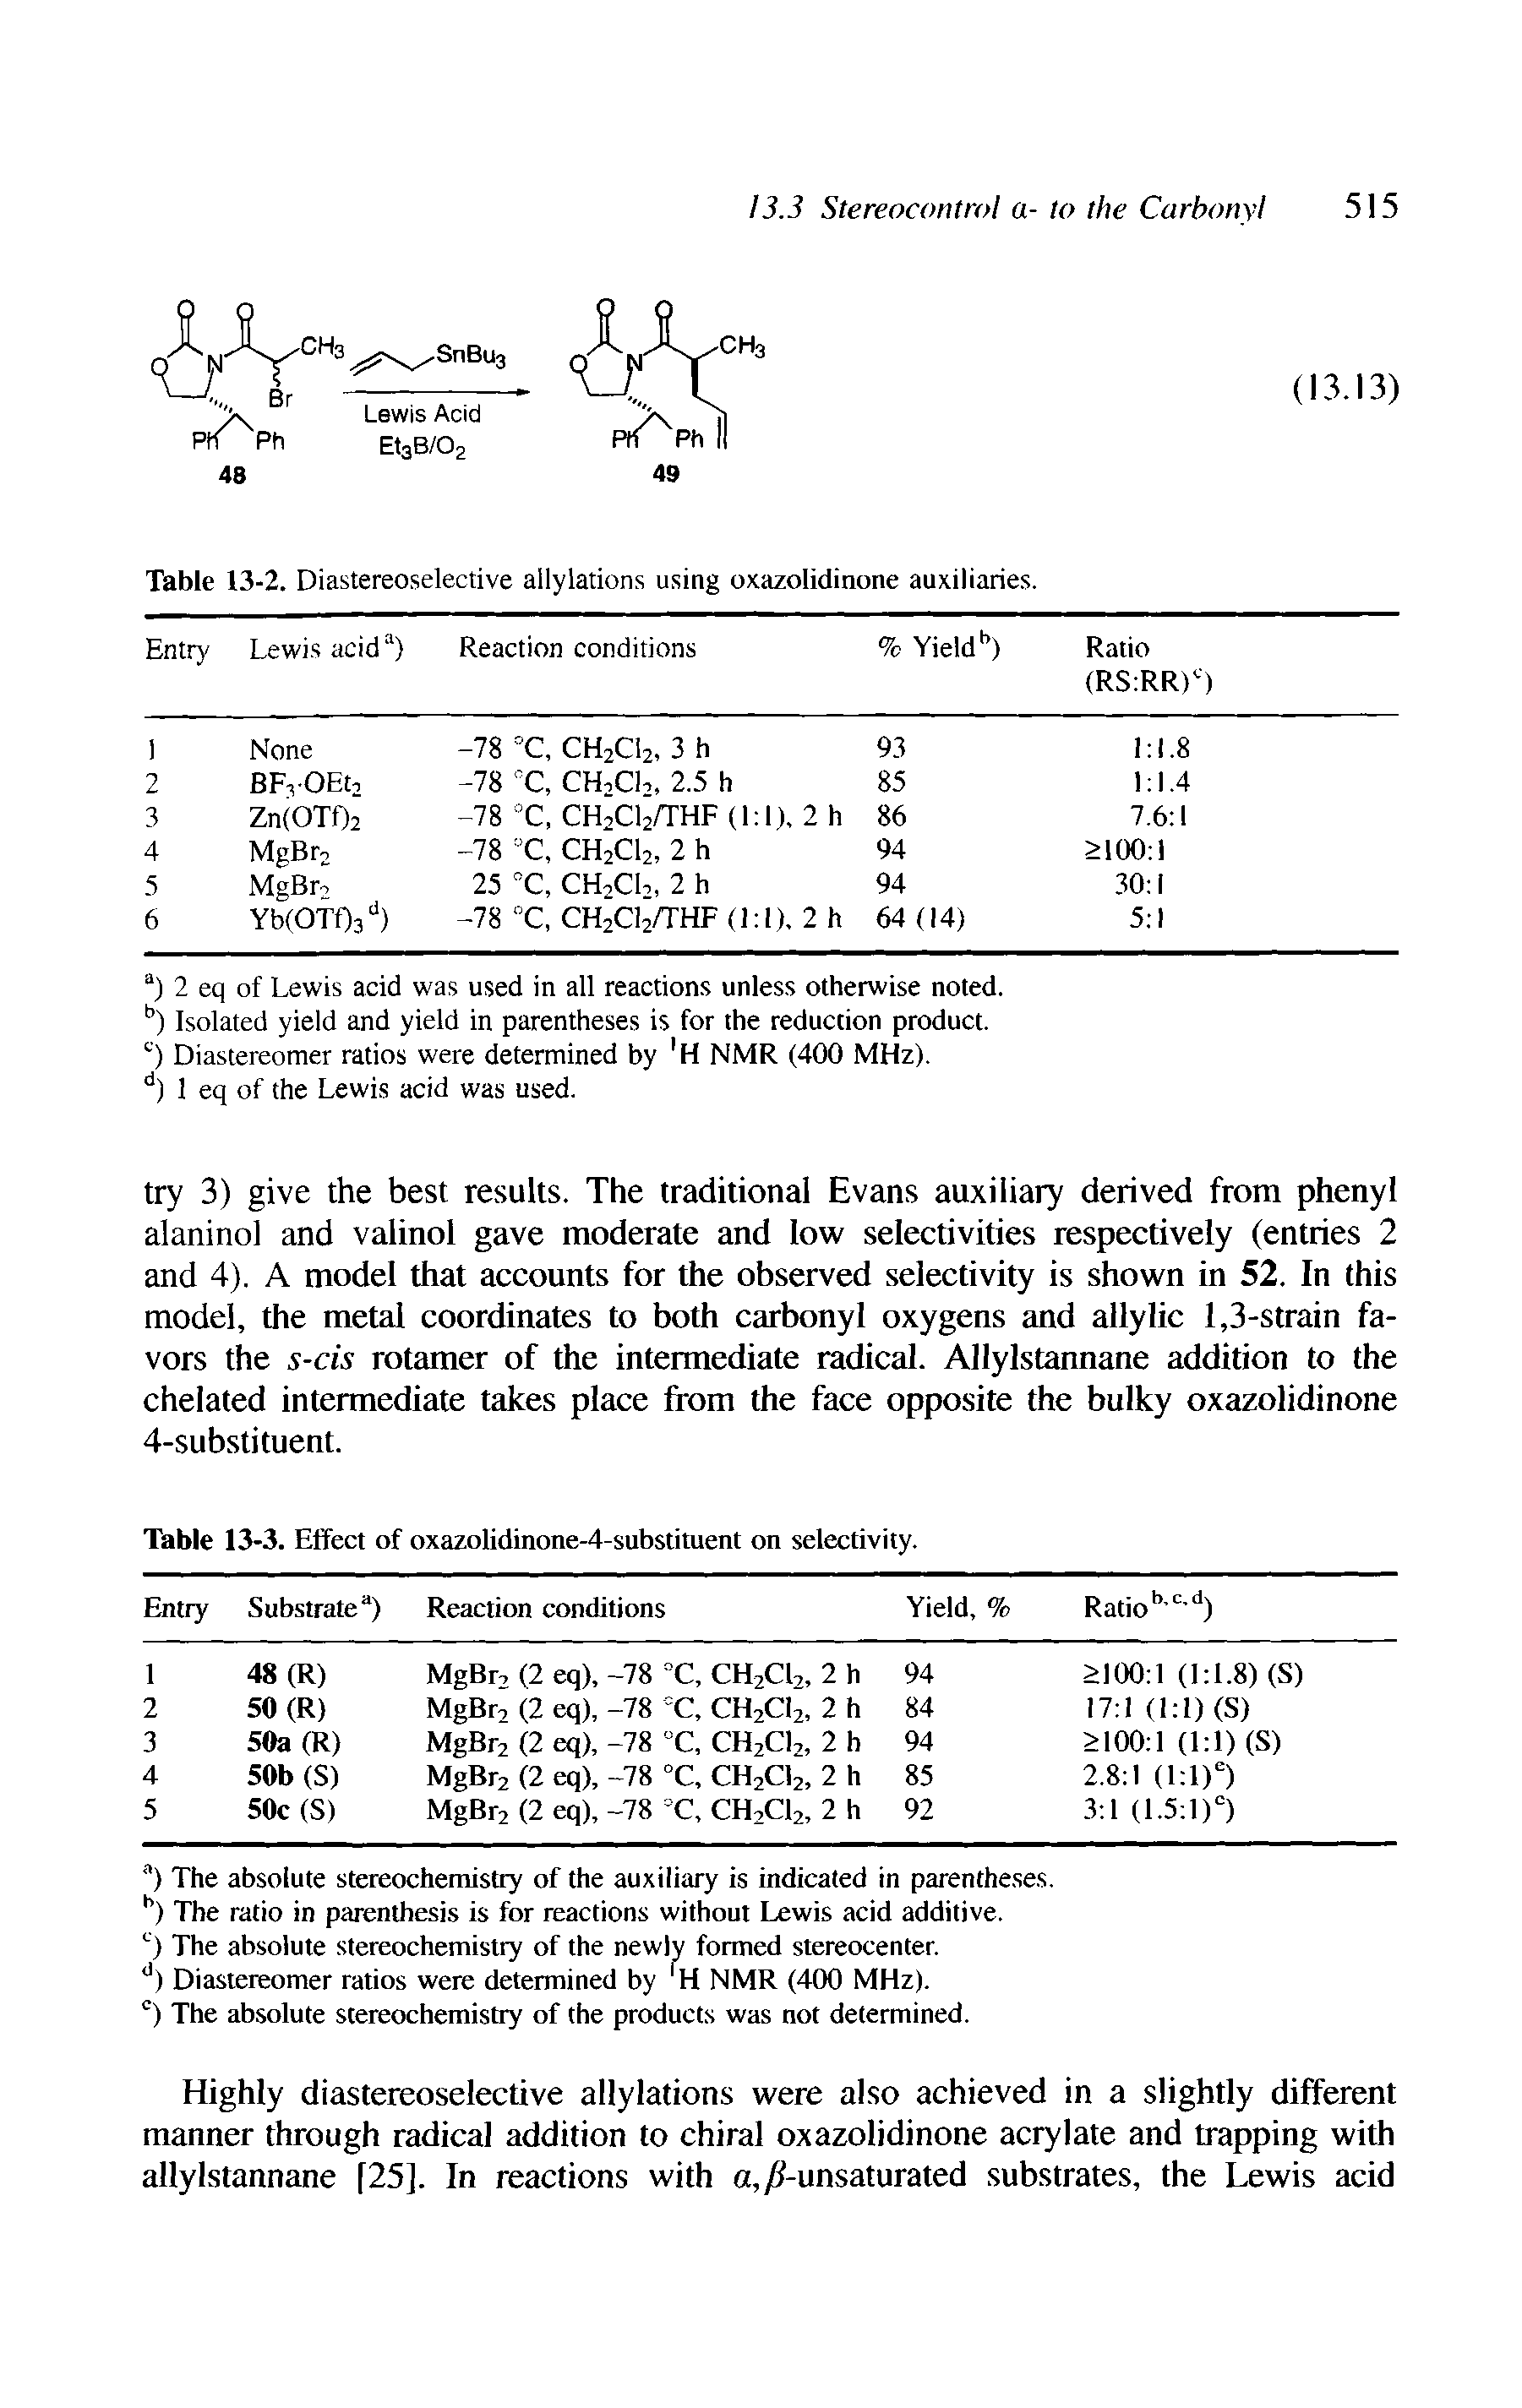 Table 13-2. Diastereoselective allylations using oxazolidinone auxiliaries.